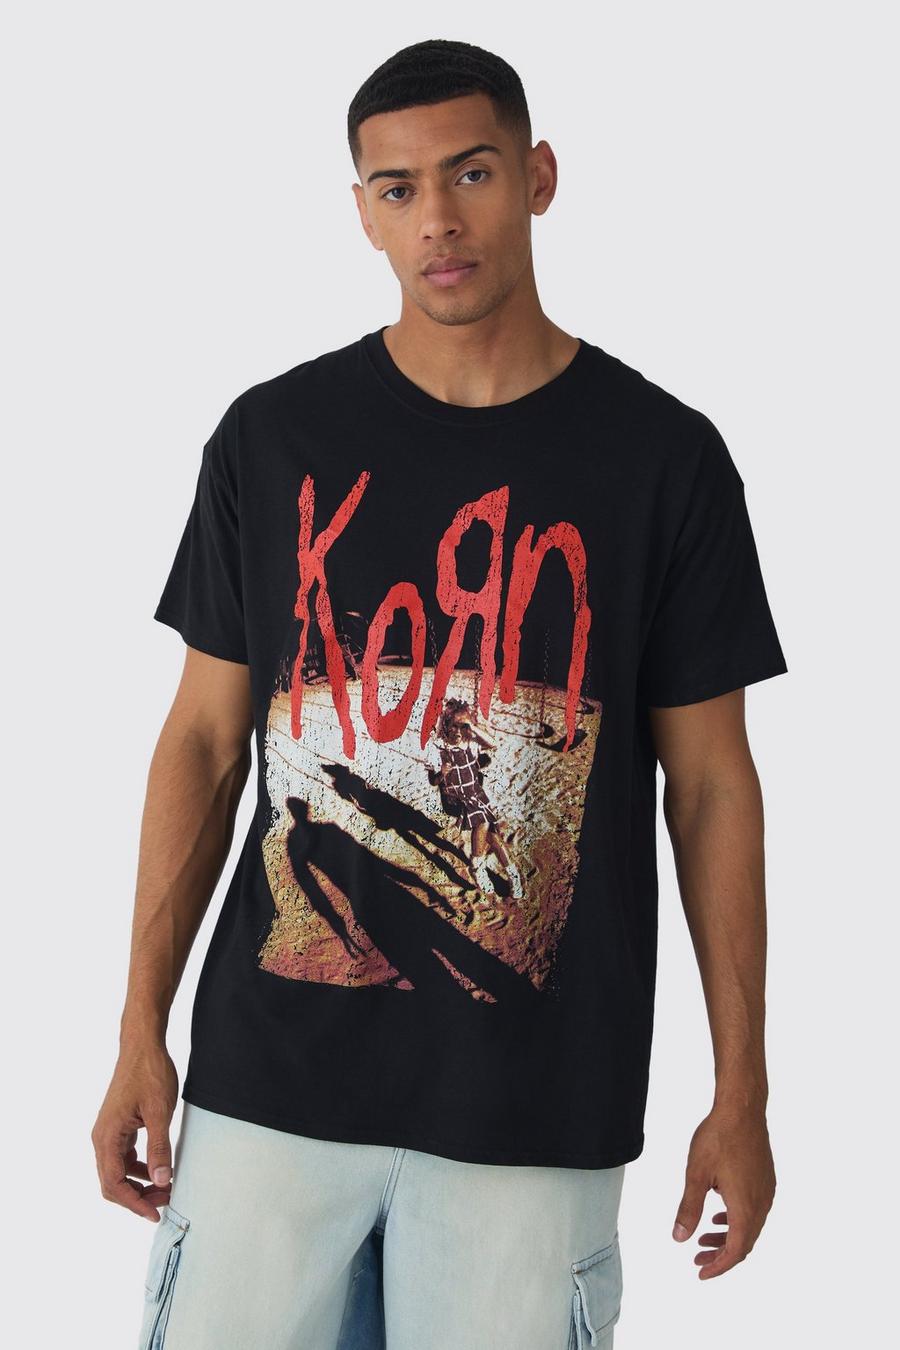 Black Oversized Korn Band License T-shirt